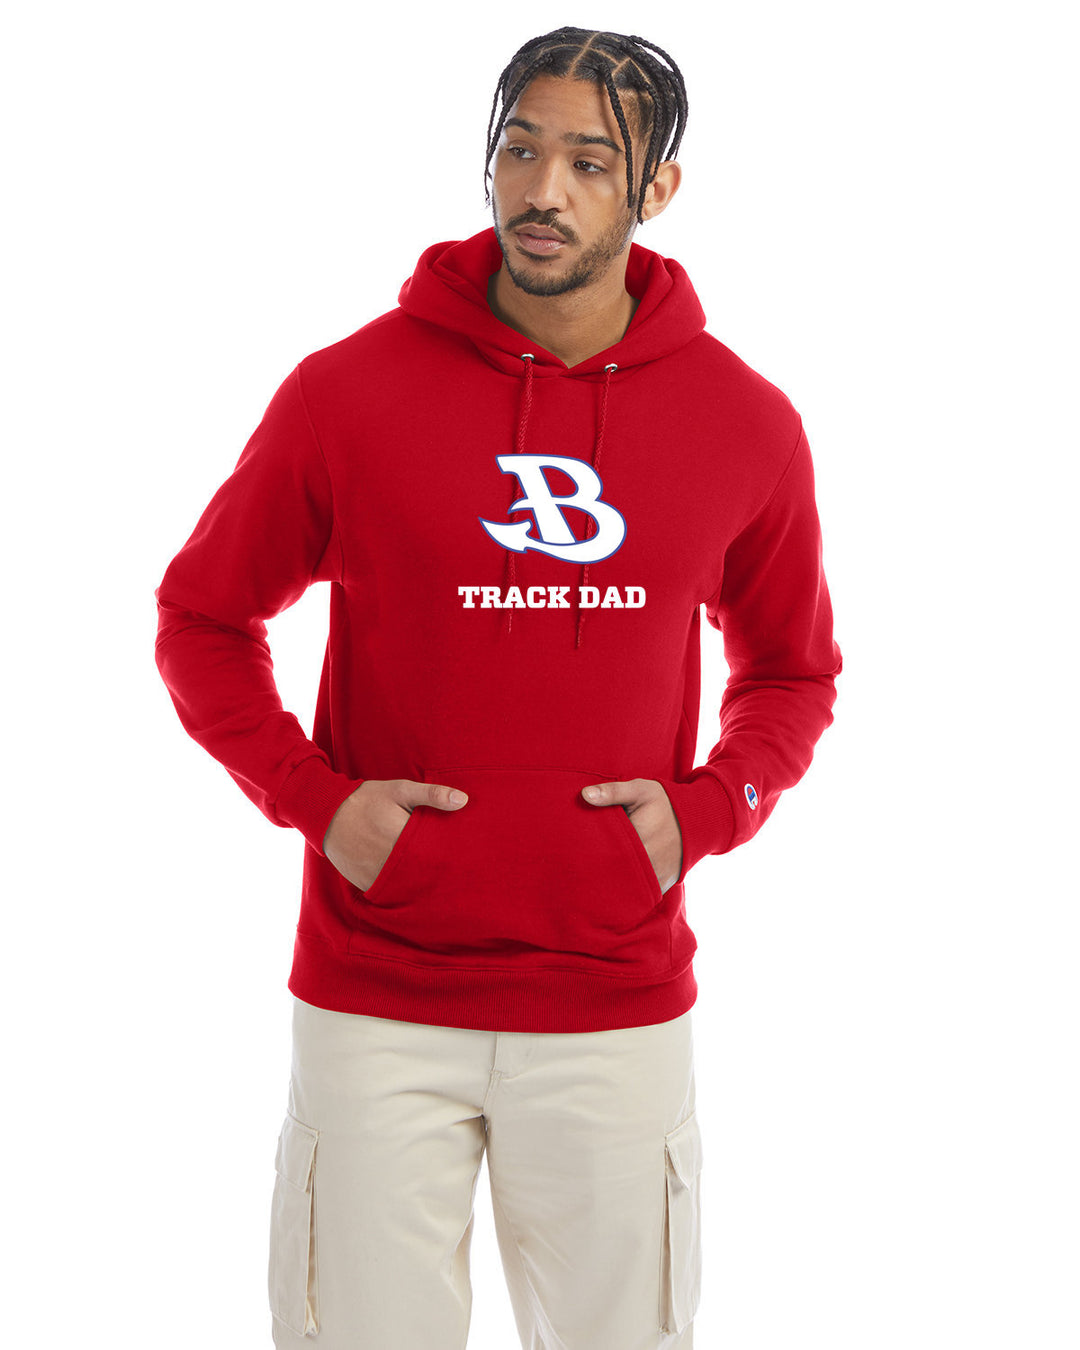 Burlington "Track Dad" Champion Pullover Hooded Sweatshirt (S700)